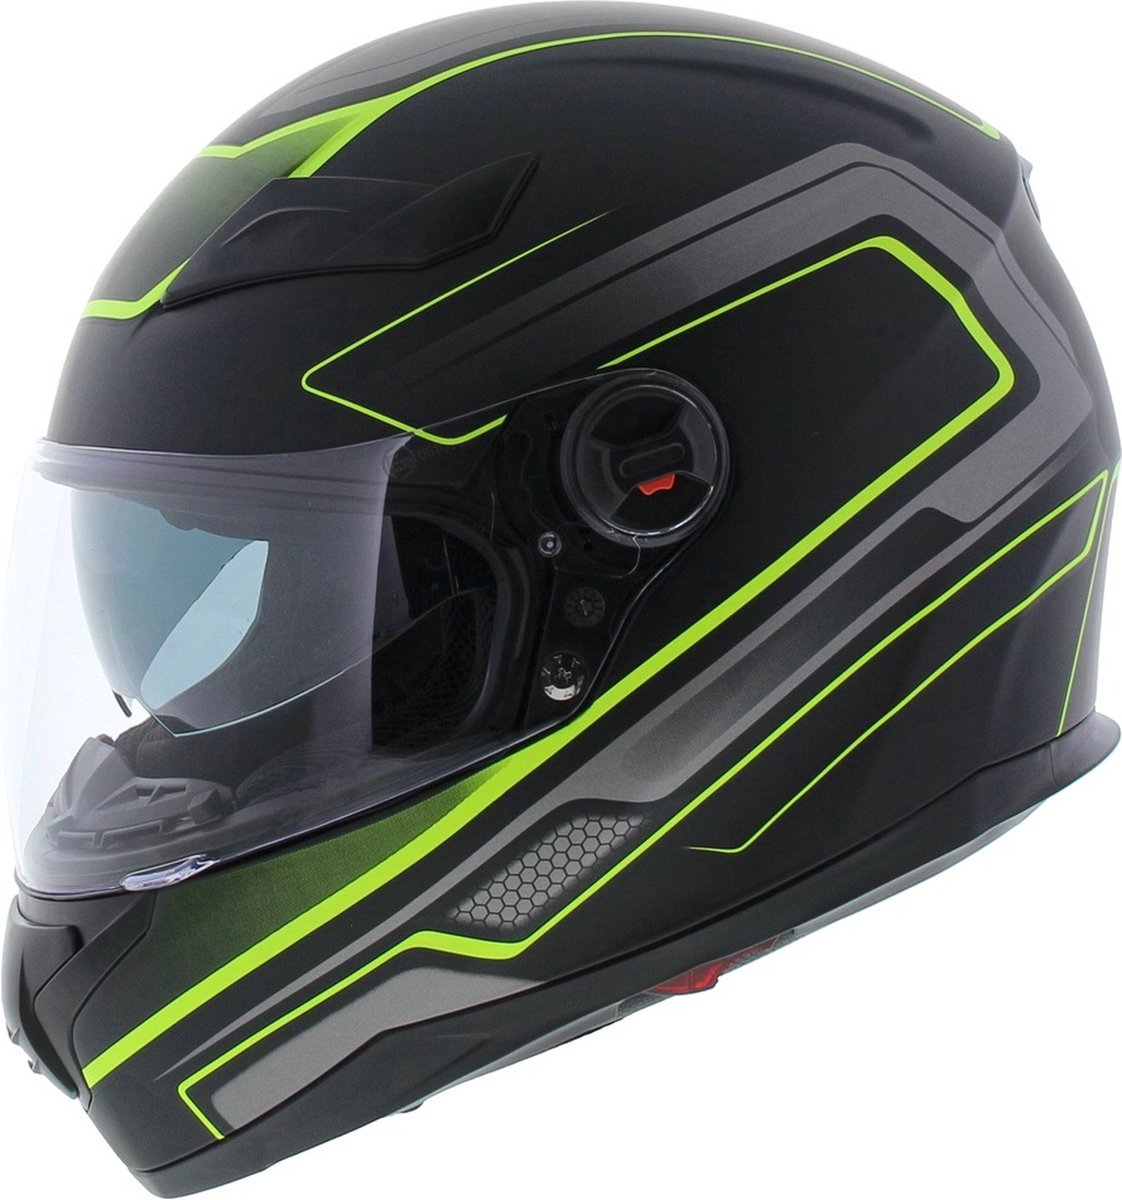 Motor / Scooter Helm - Vito Falcone - Integraalhelm - Mat zwart / geel - S